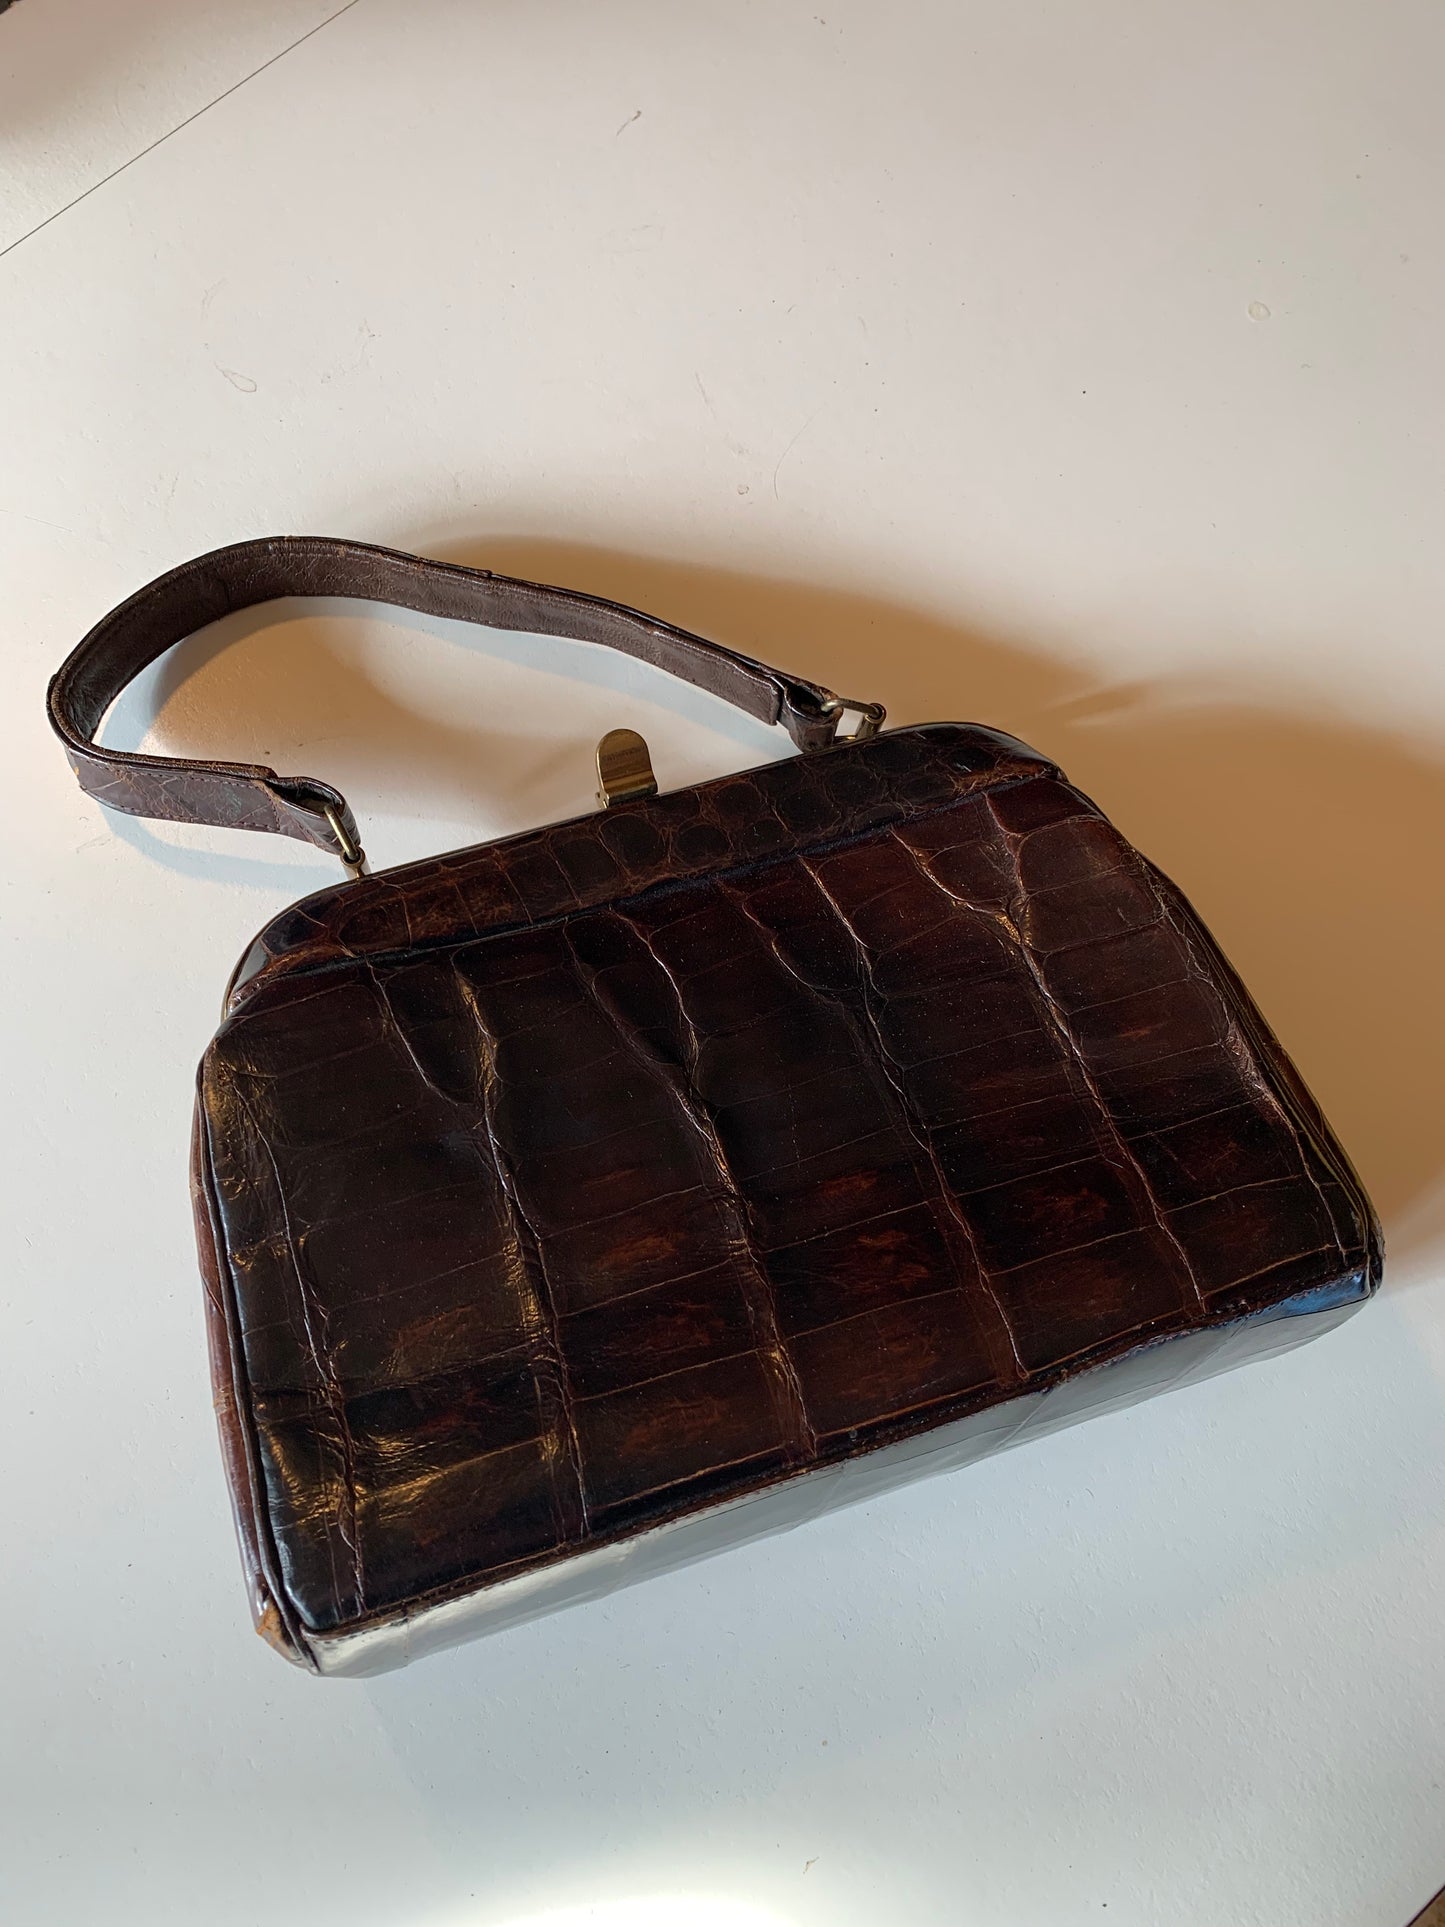 Chocolate Brown Alligator Kelly Style Handbag circa 1940s